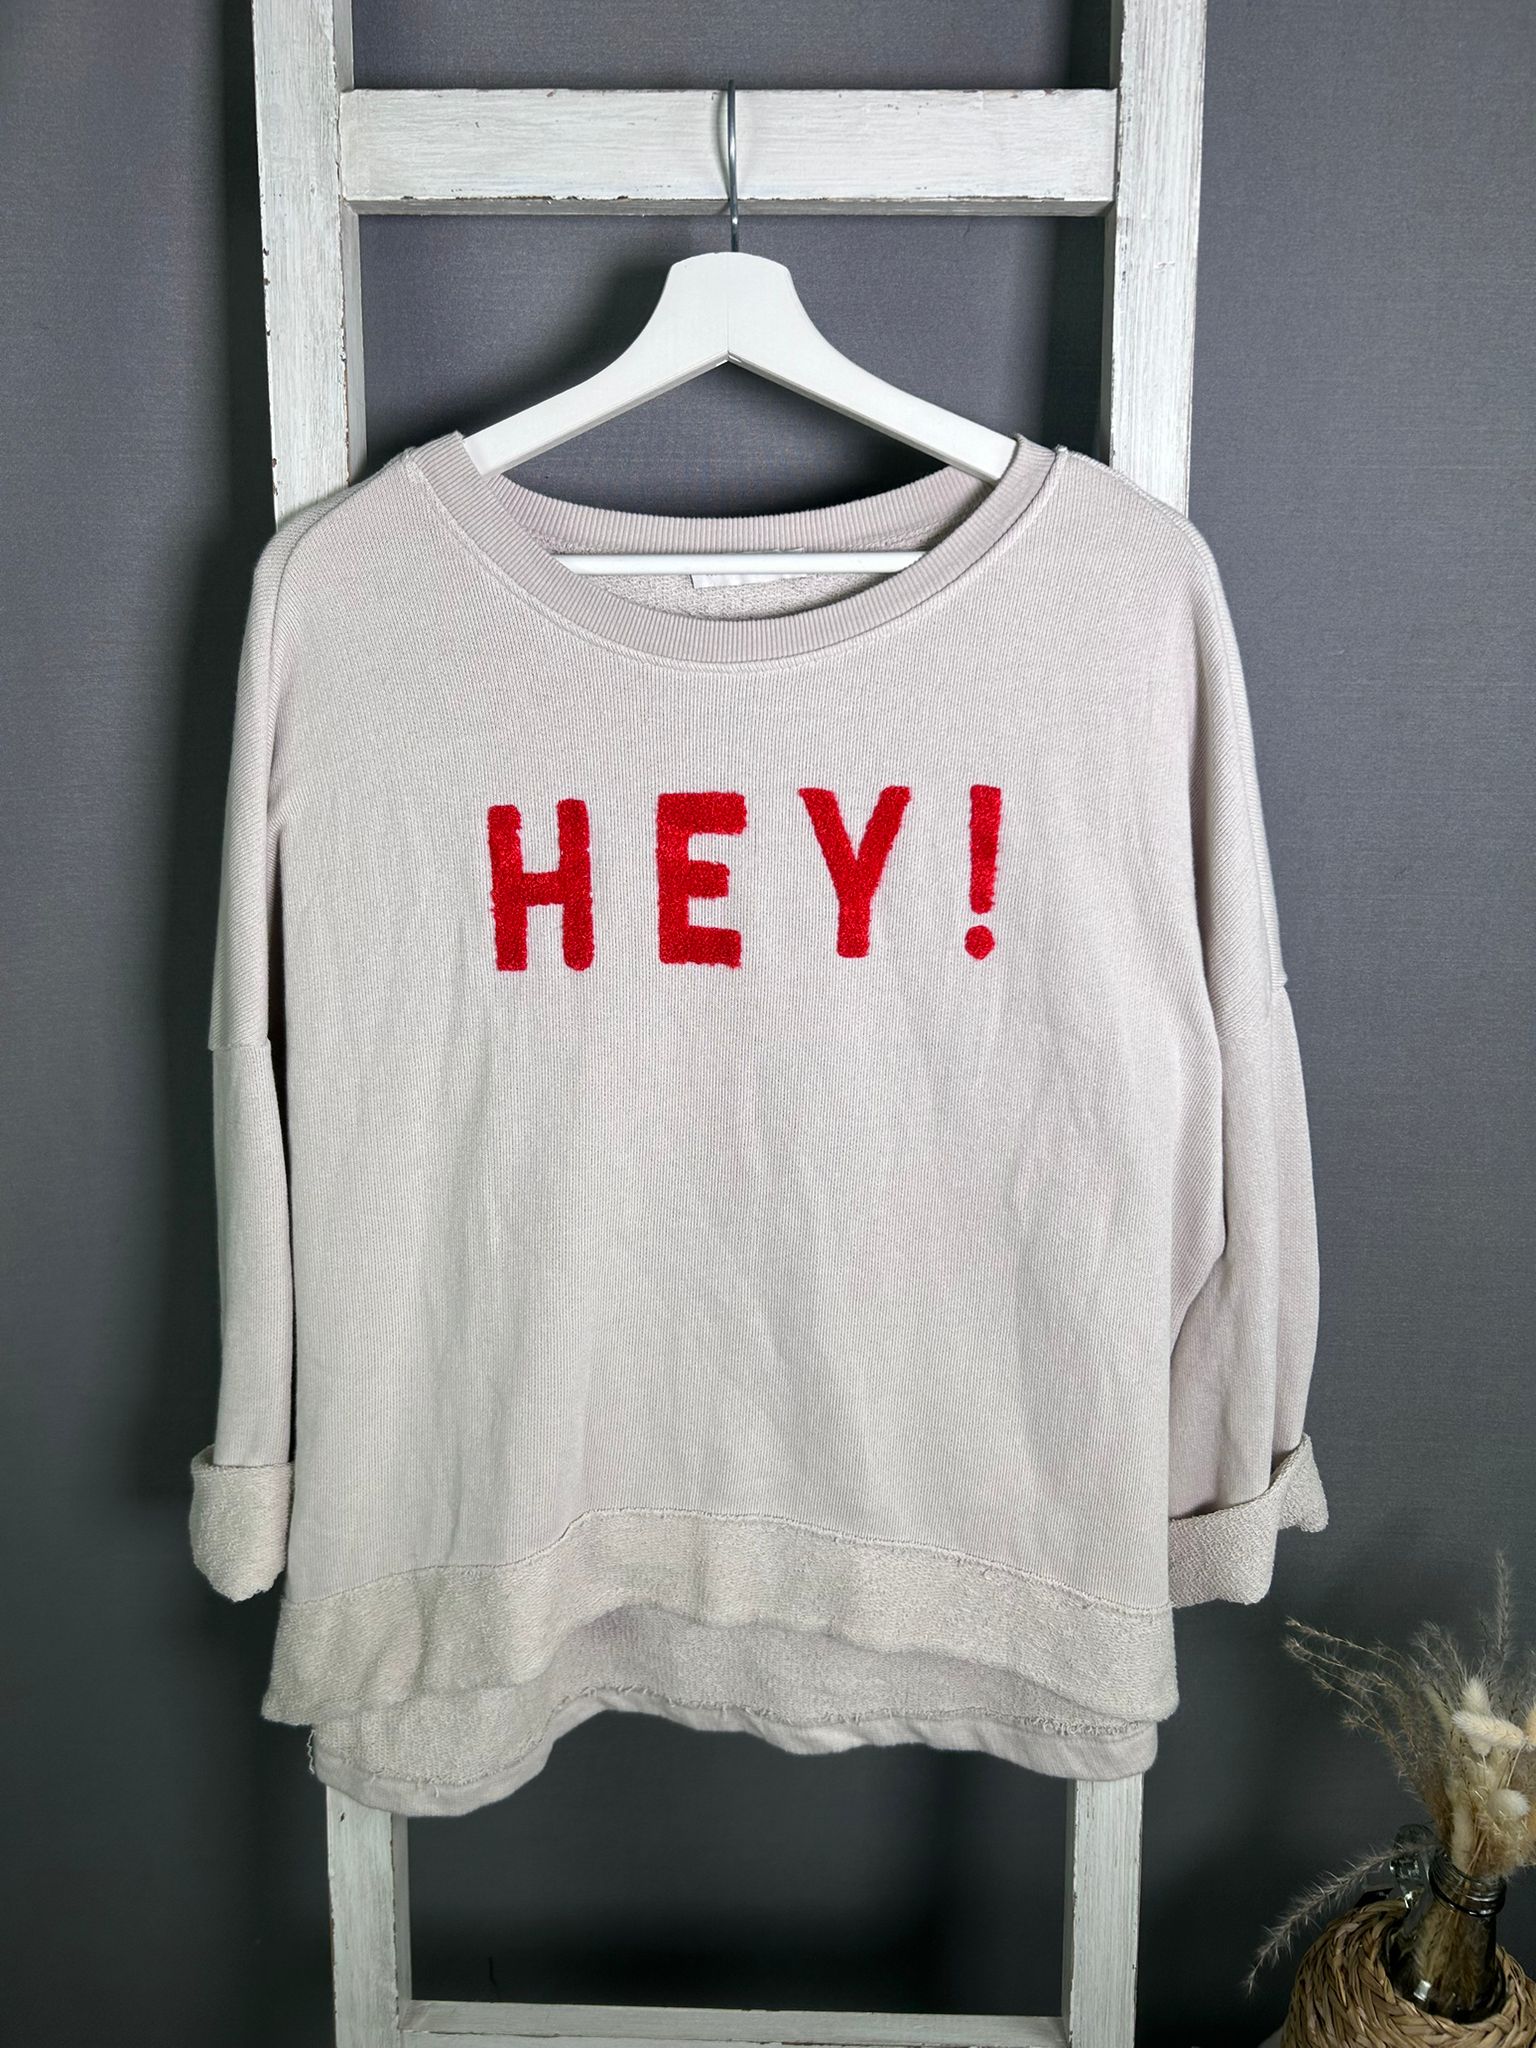 Sweater mit Flokati “HEY!” Druck